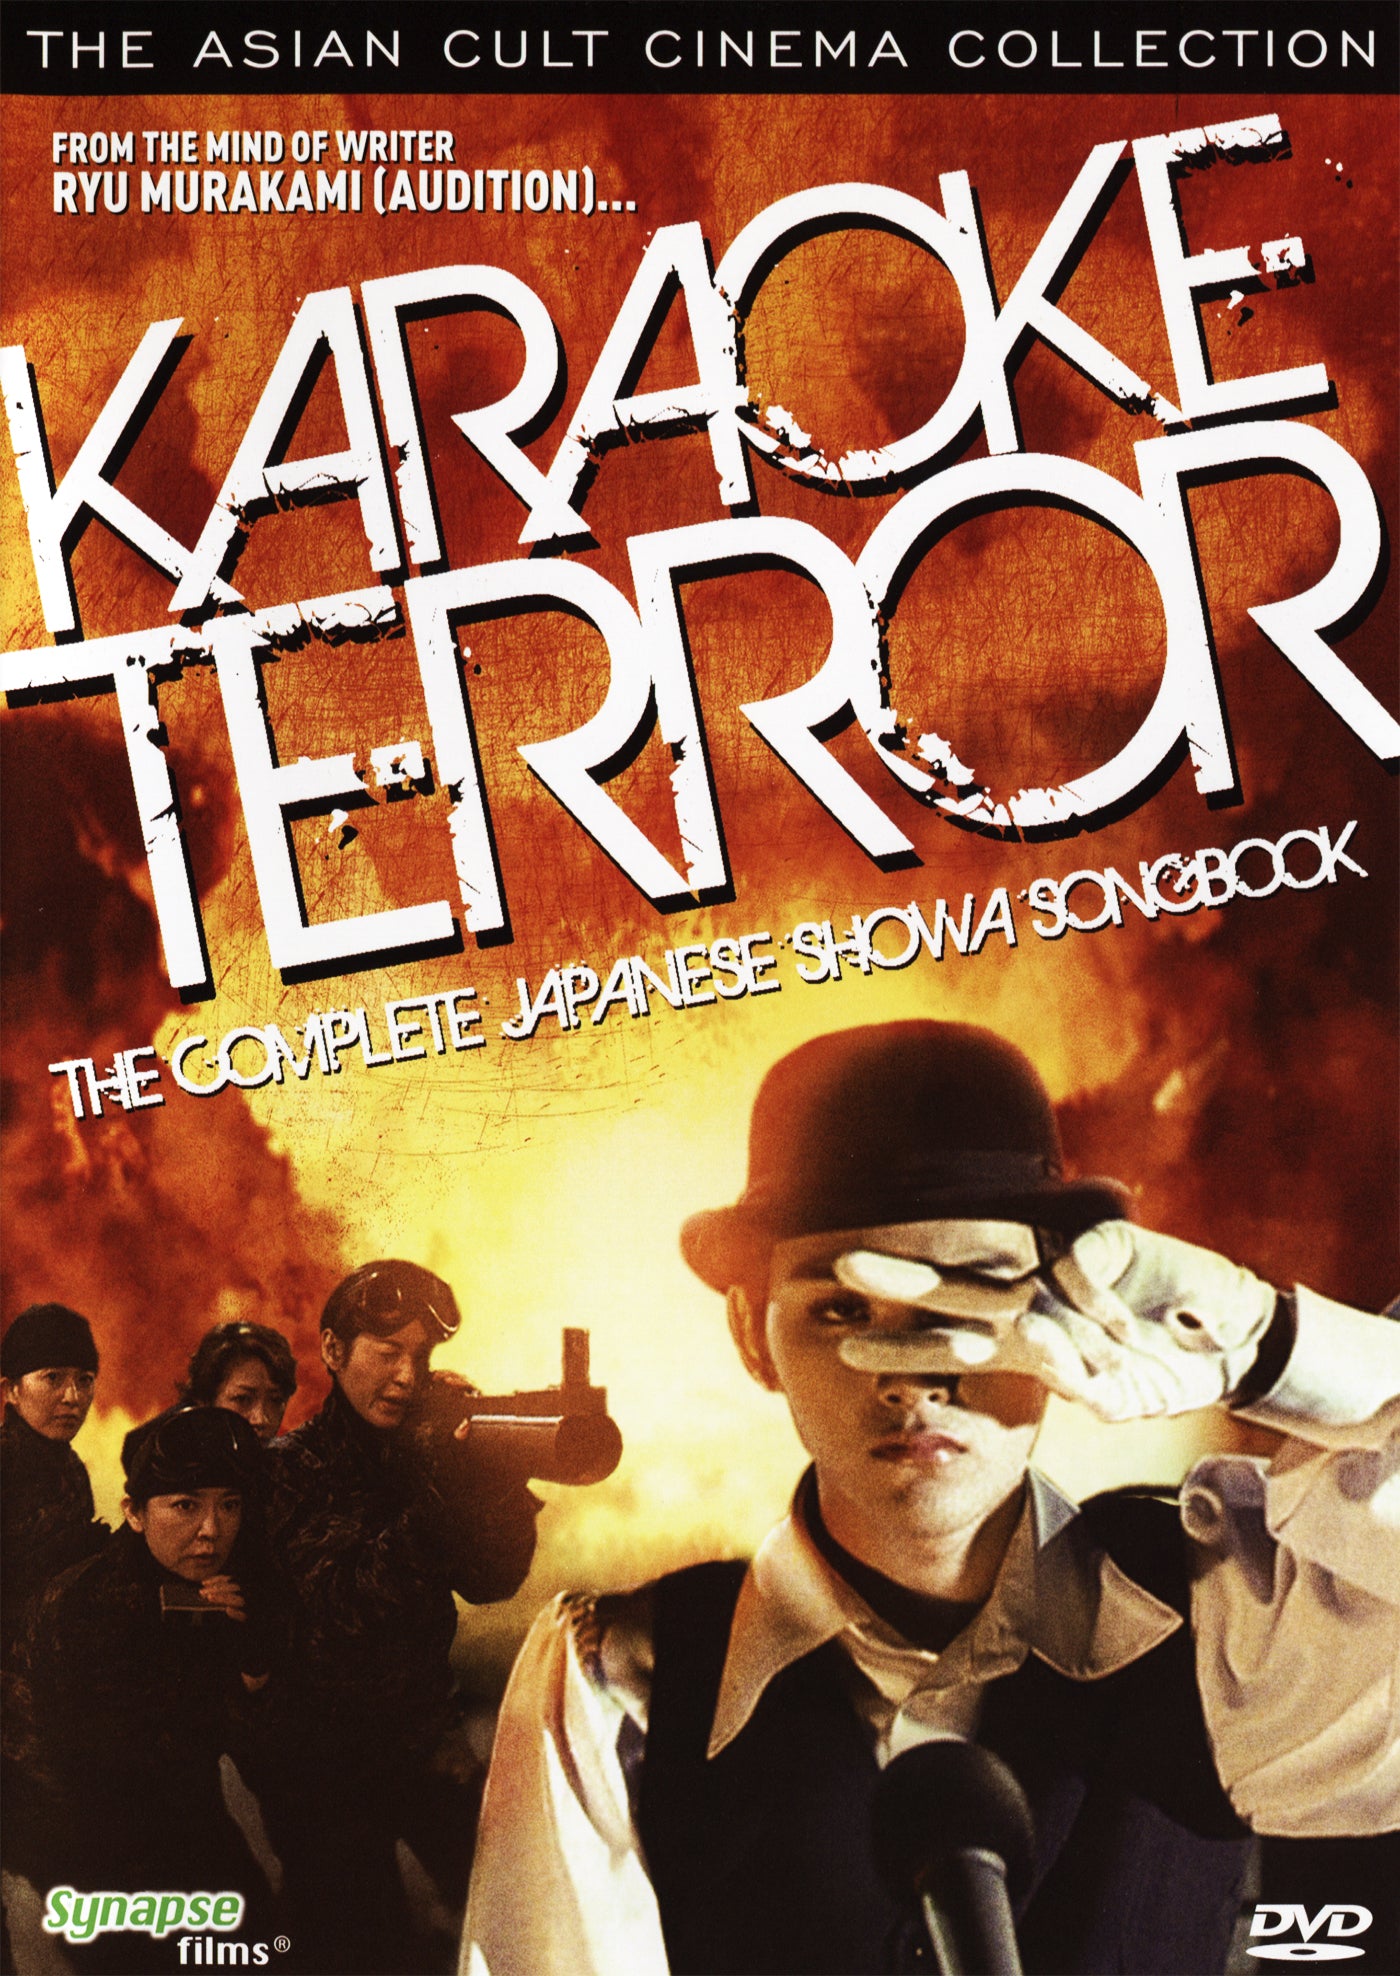 Karaoke Terror: The Complete Japanese Showa Songbook (DVD)